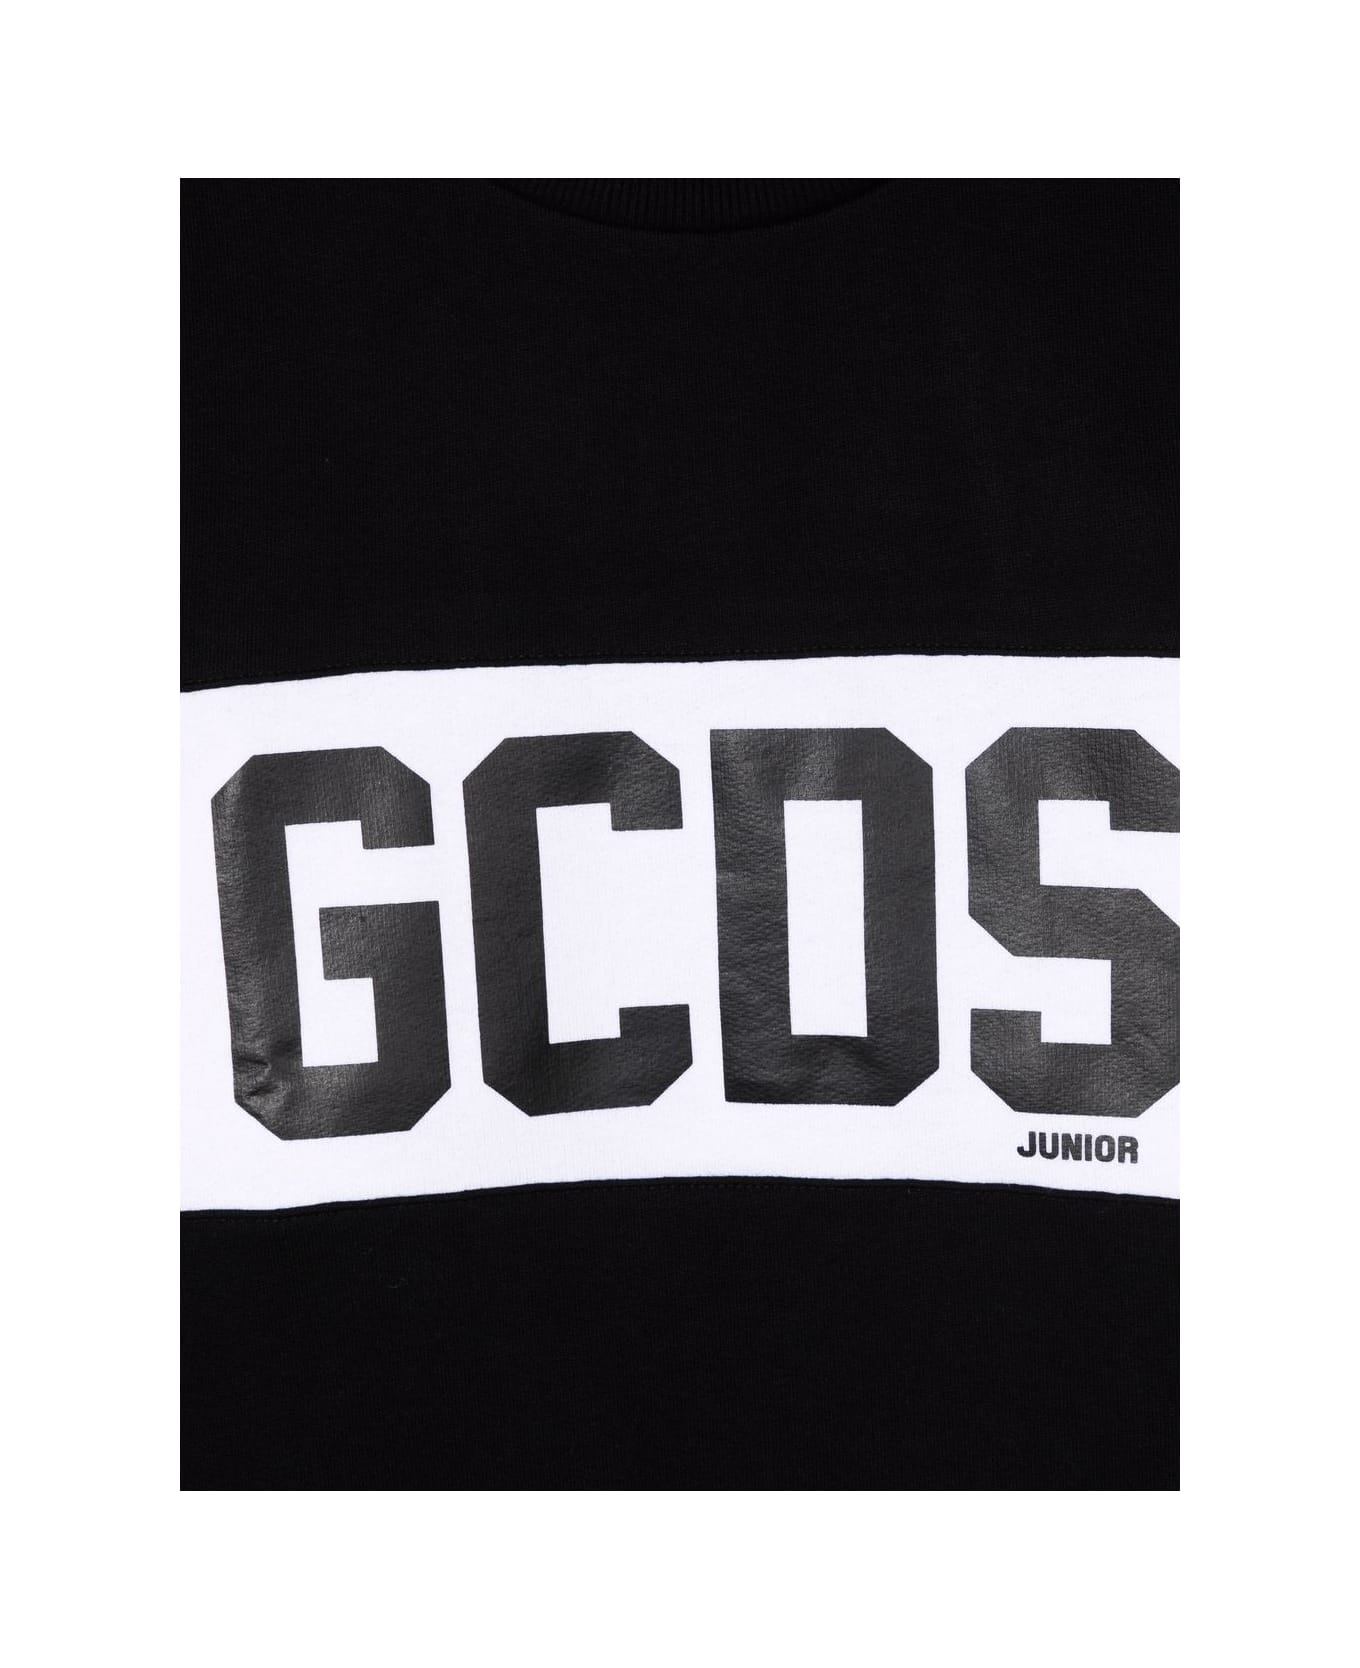 GCDS Mini Black Kids Crew-neck Sweatshirt With Gcds Logo Band - BLACK ニットウェア＆スウェットシャツ